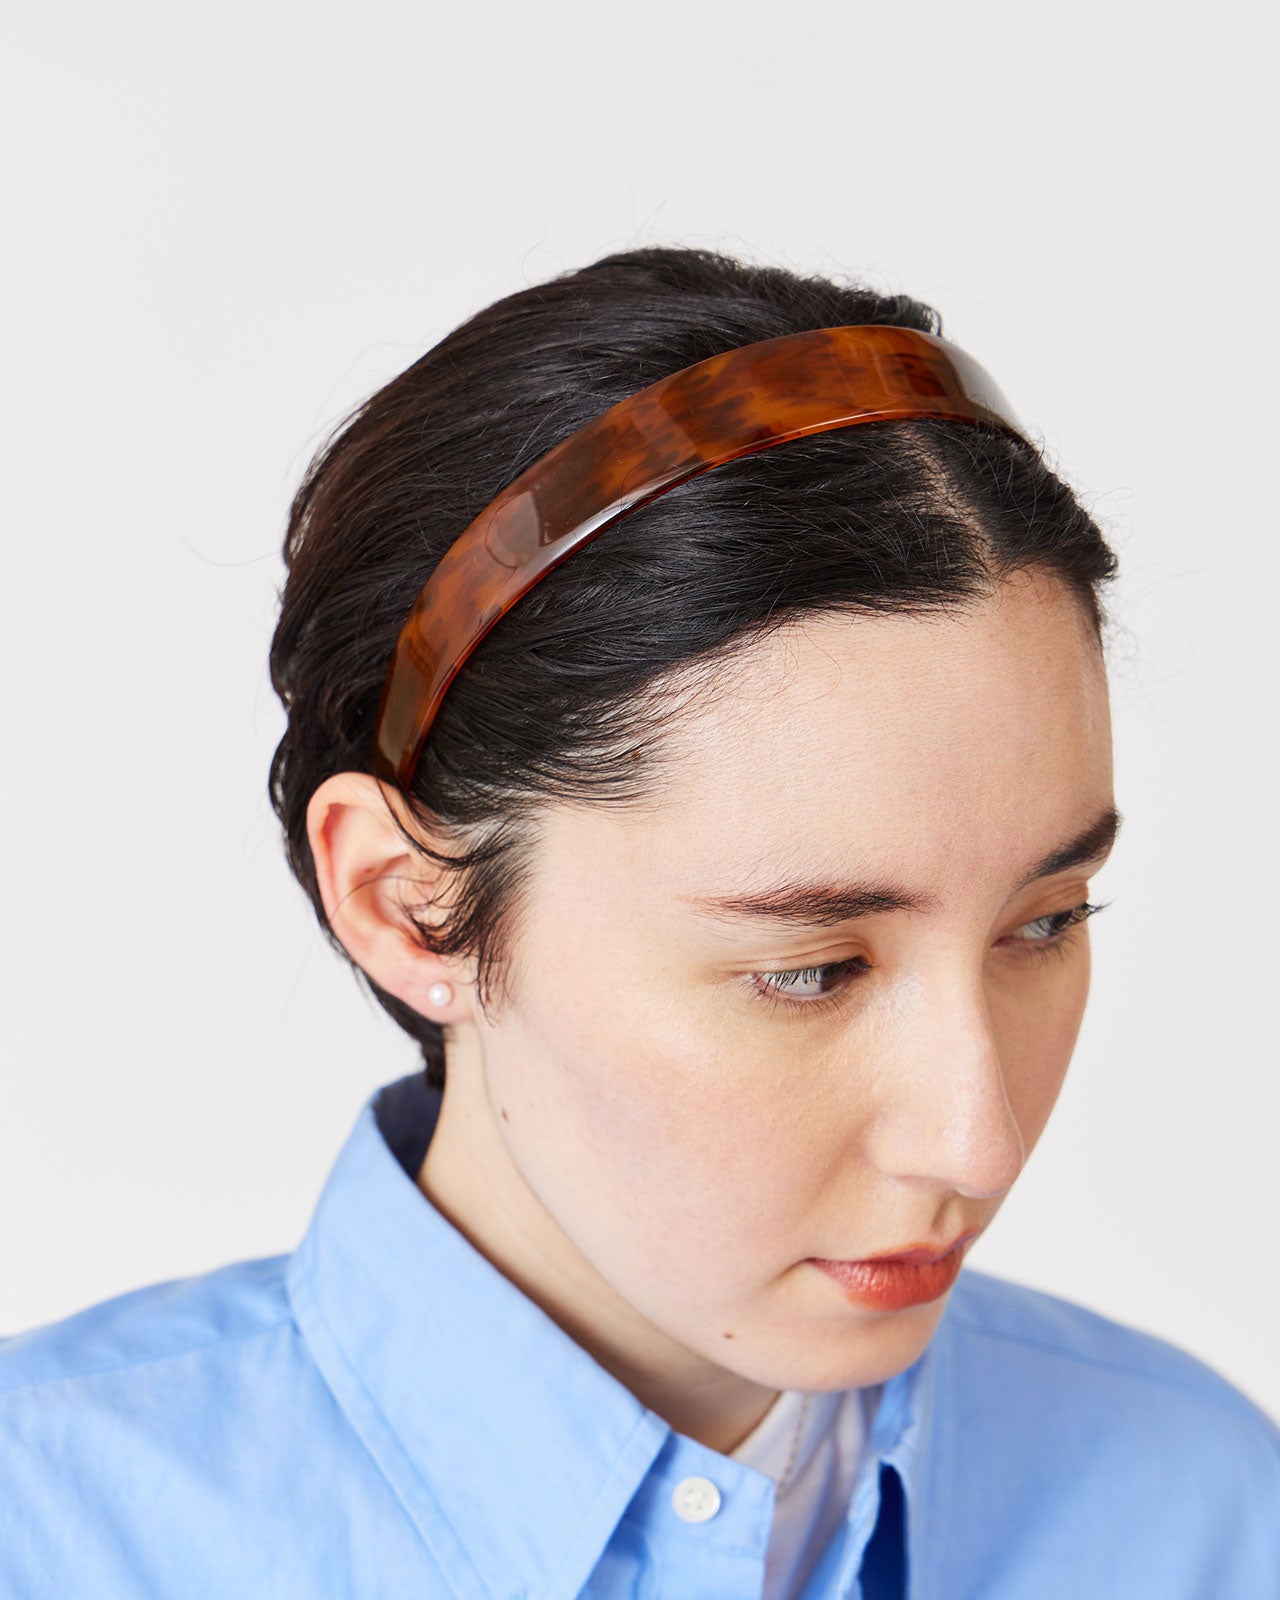 IRIS47 Torotoiseshell headband